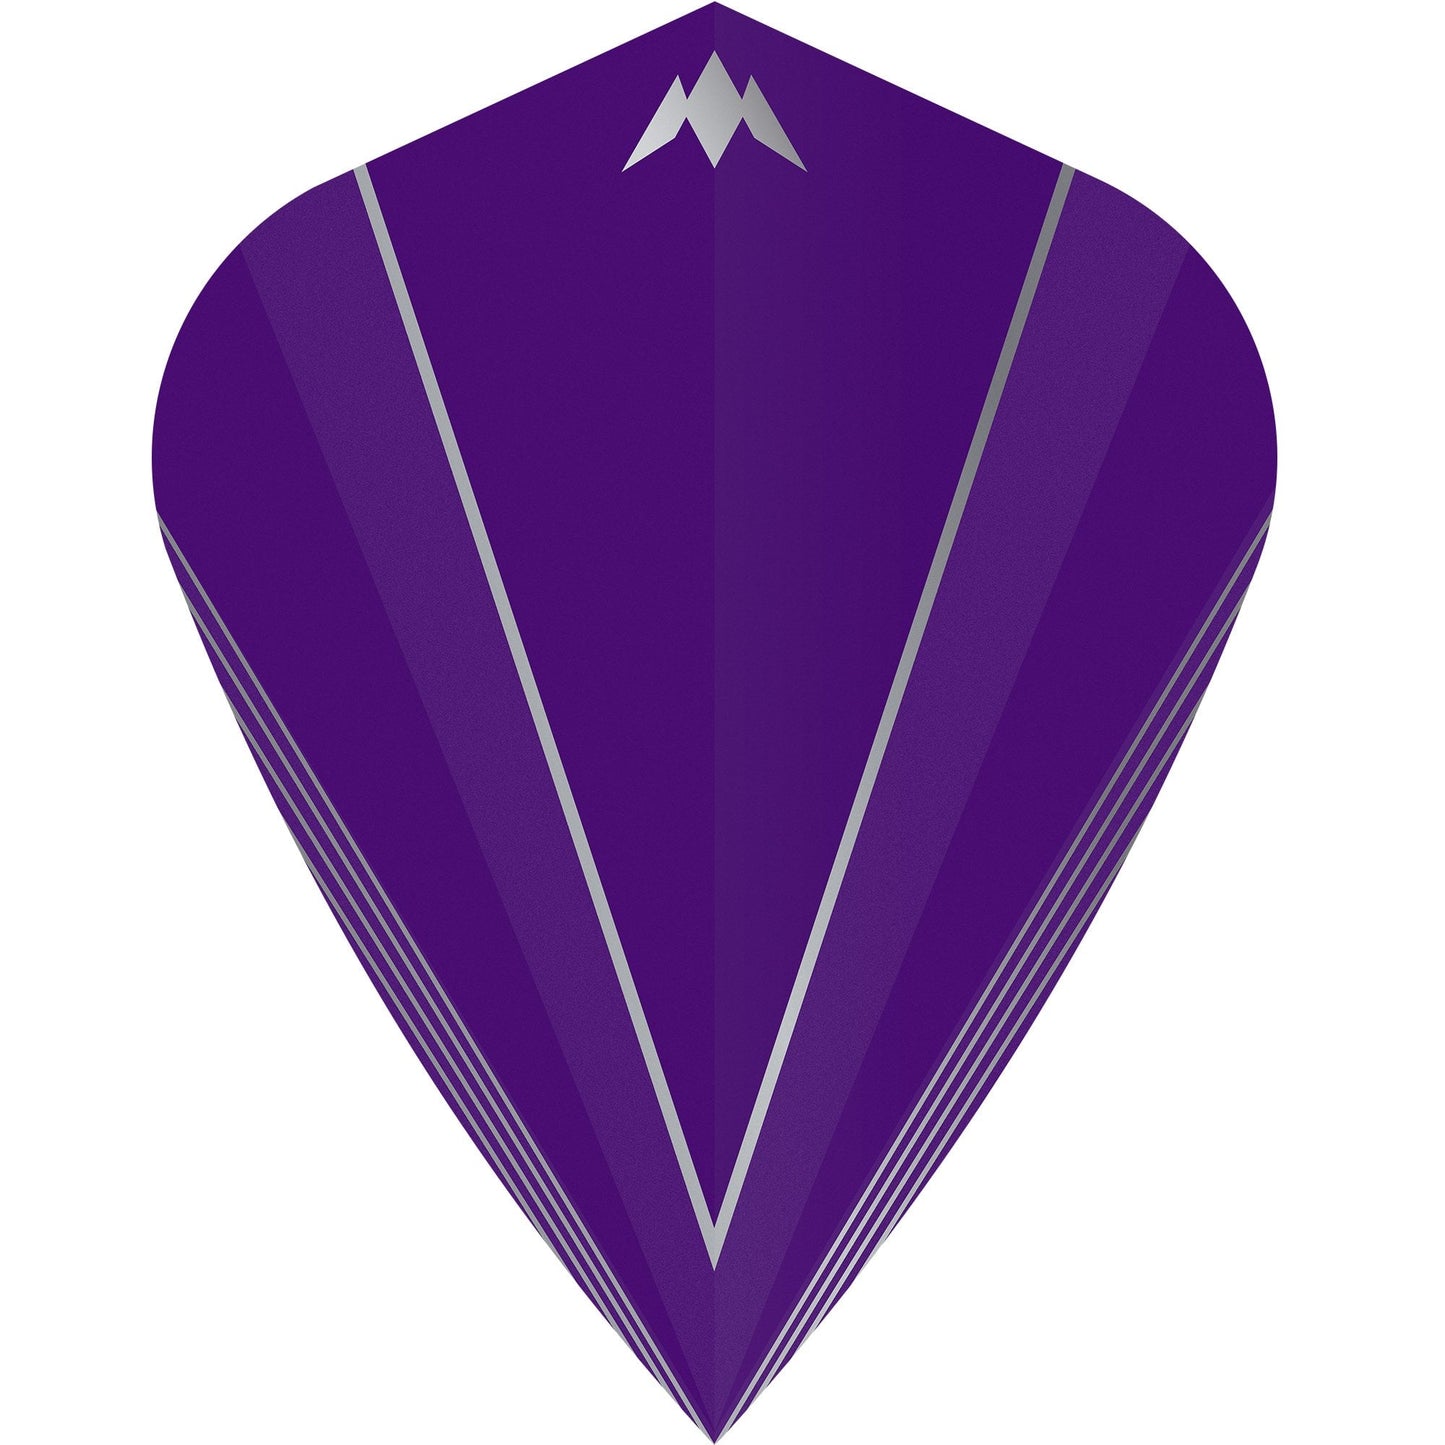 Mission Shades Dart Flights - 100 Micron - Kite Purple